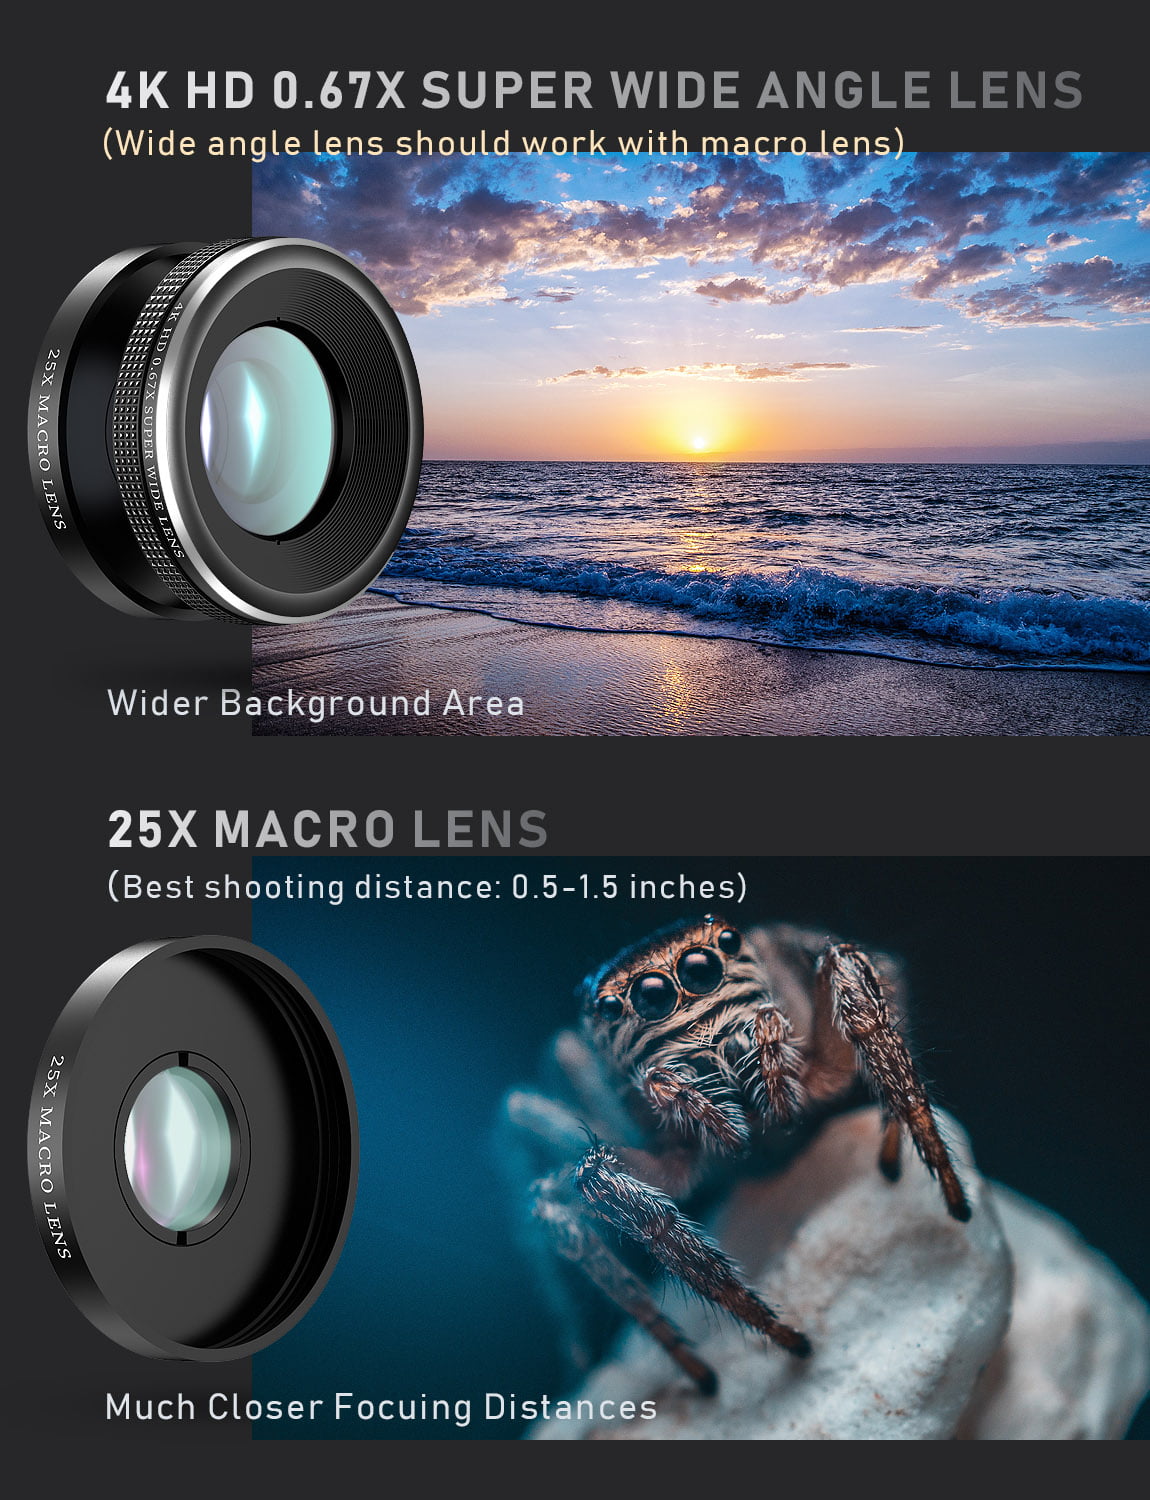 205° Fisheye Lens 22X Telephoto Lens 4K HD 0.67X Super Wide Angle Lens & 25X Macro Lens Phone Camera Lens Phone Lens for iPad iPhone Samsung Android Pixel Huawei One Plus 